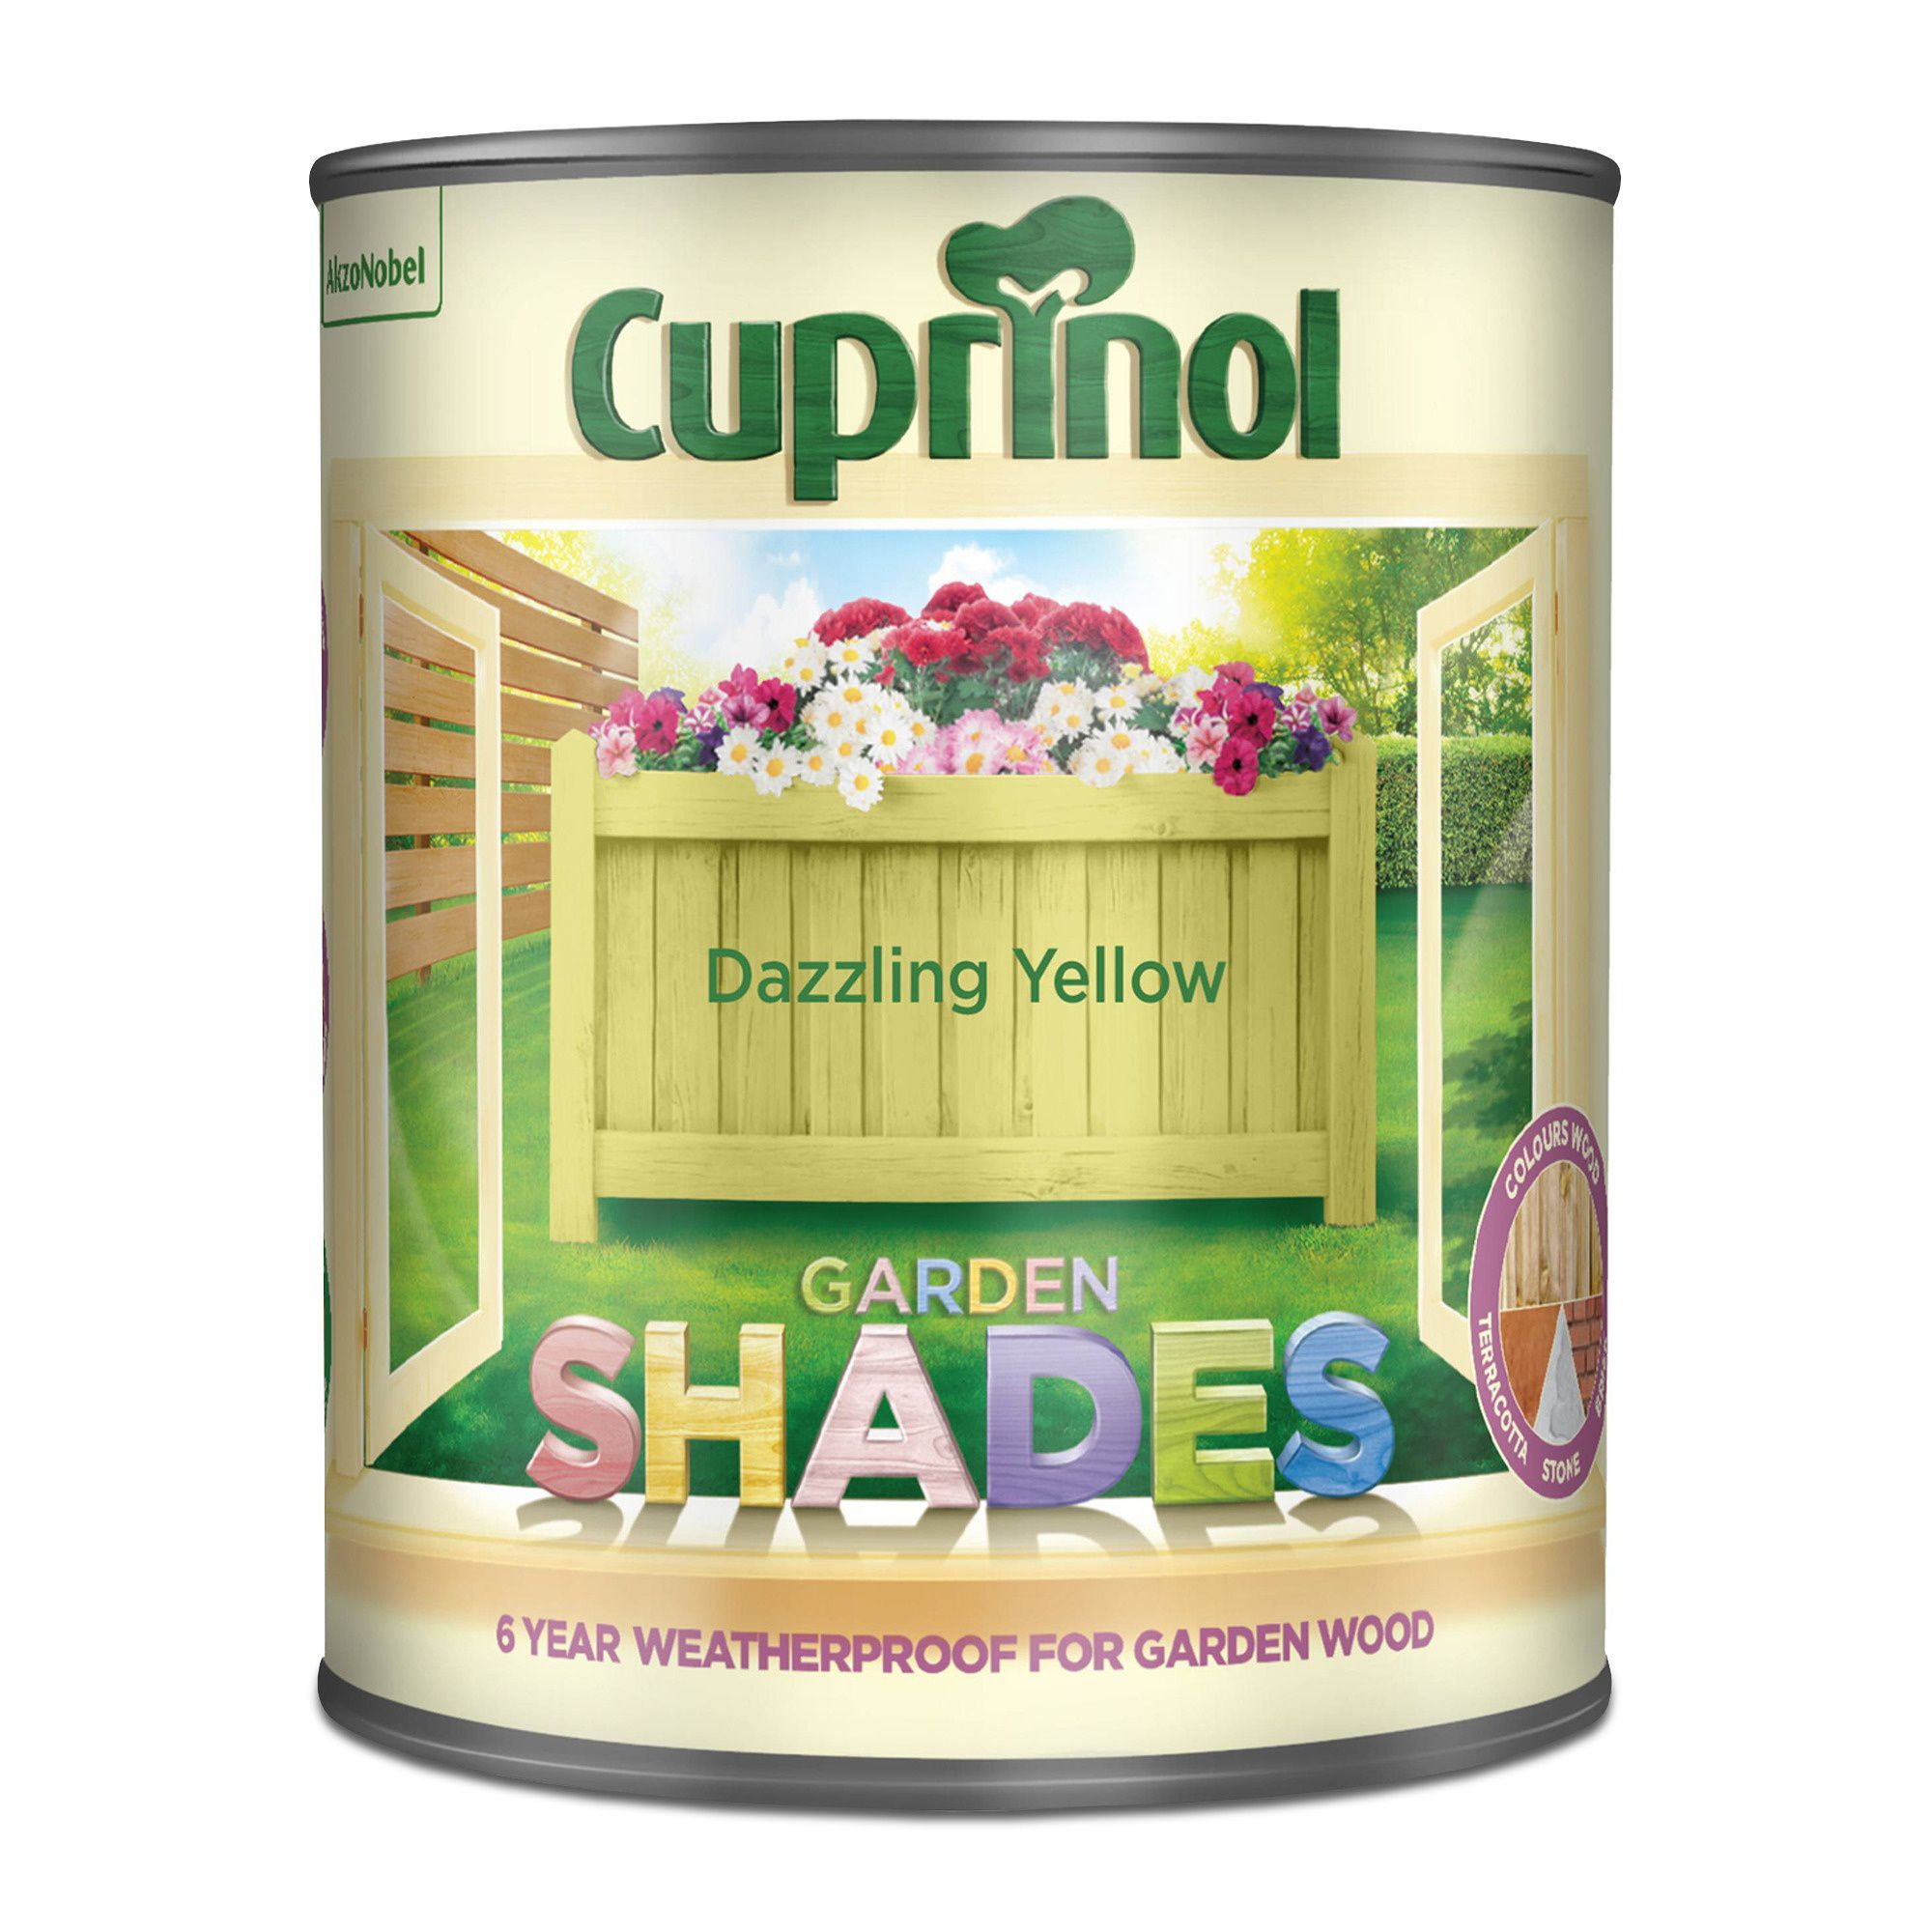 Cuprinol Garden shades Dazzling yellow Matt Multi-surface Exterior Wood paint, 1L